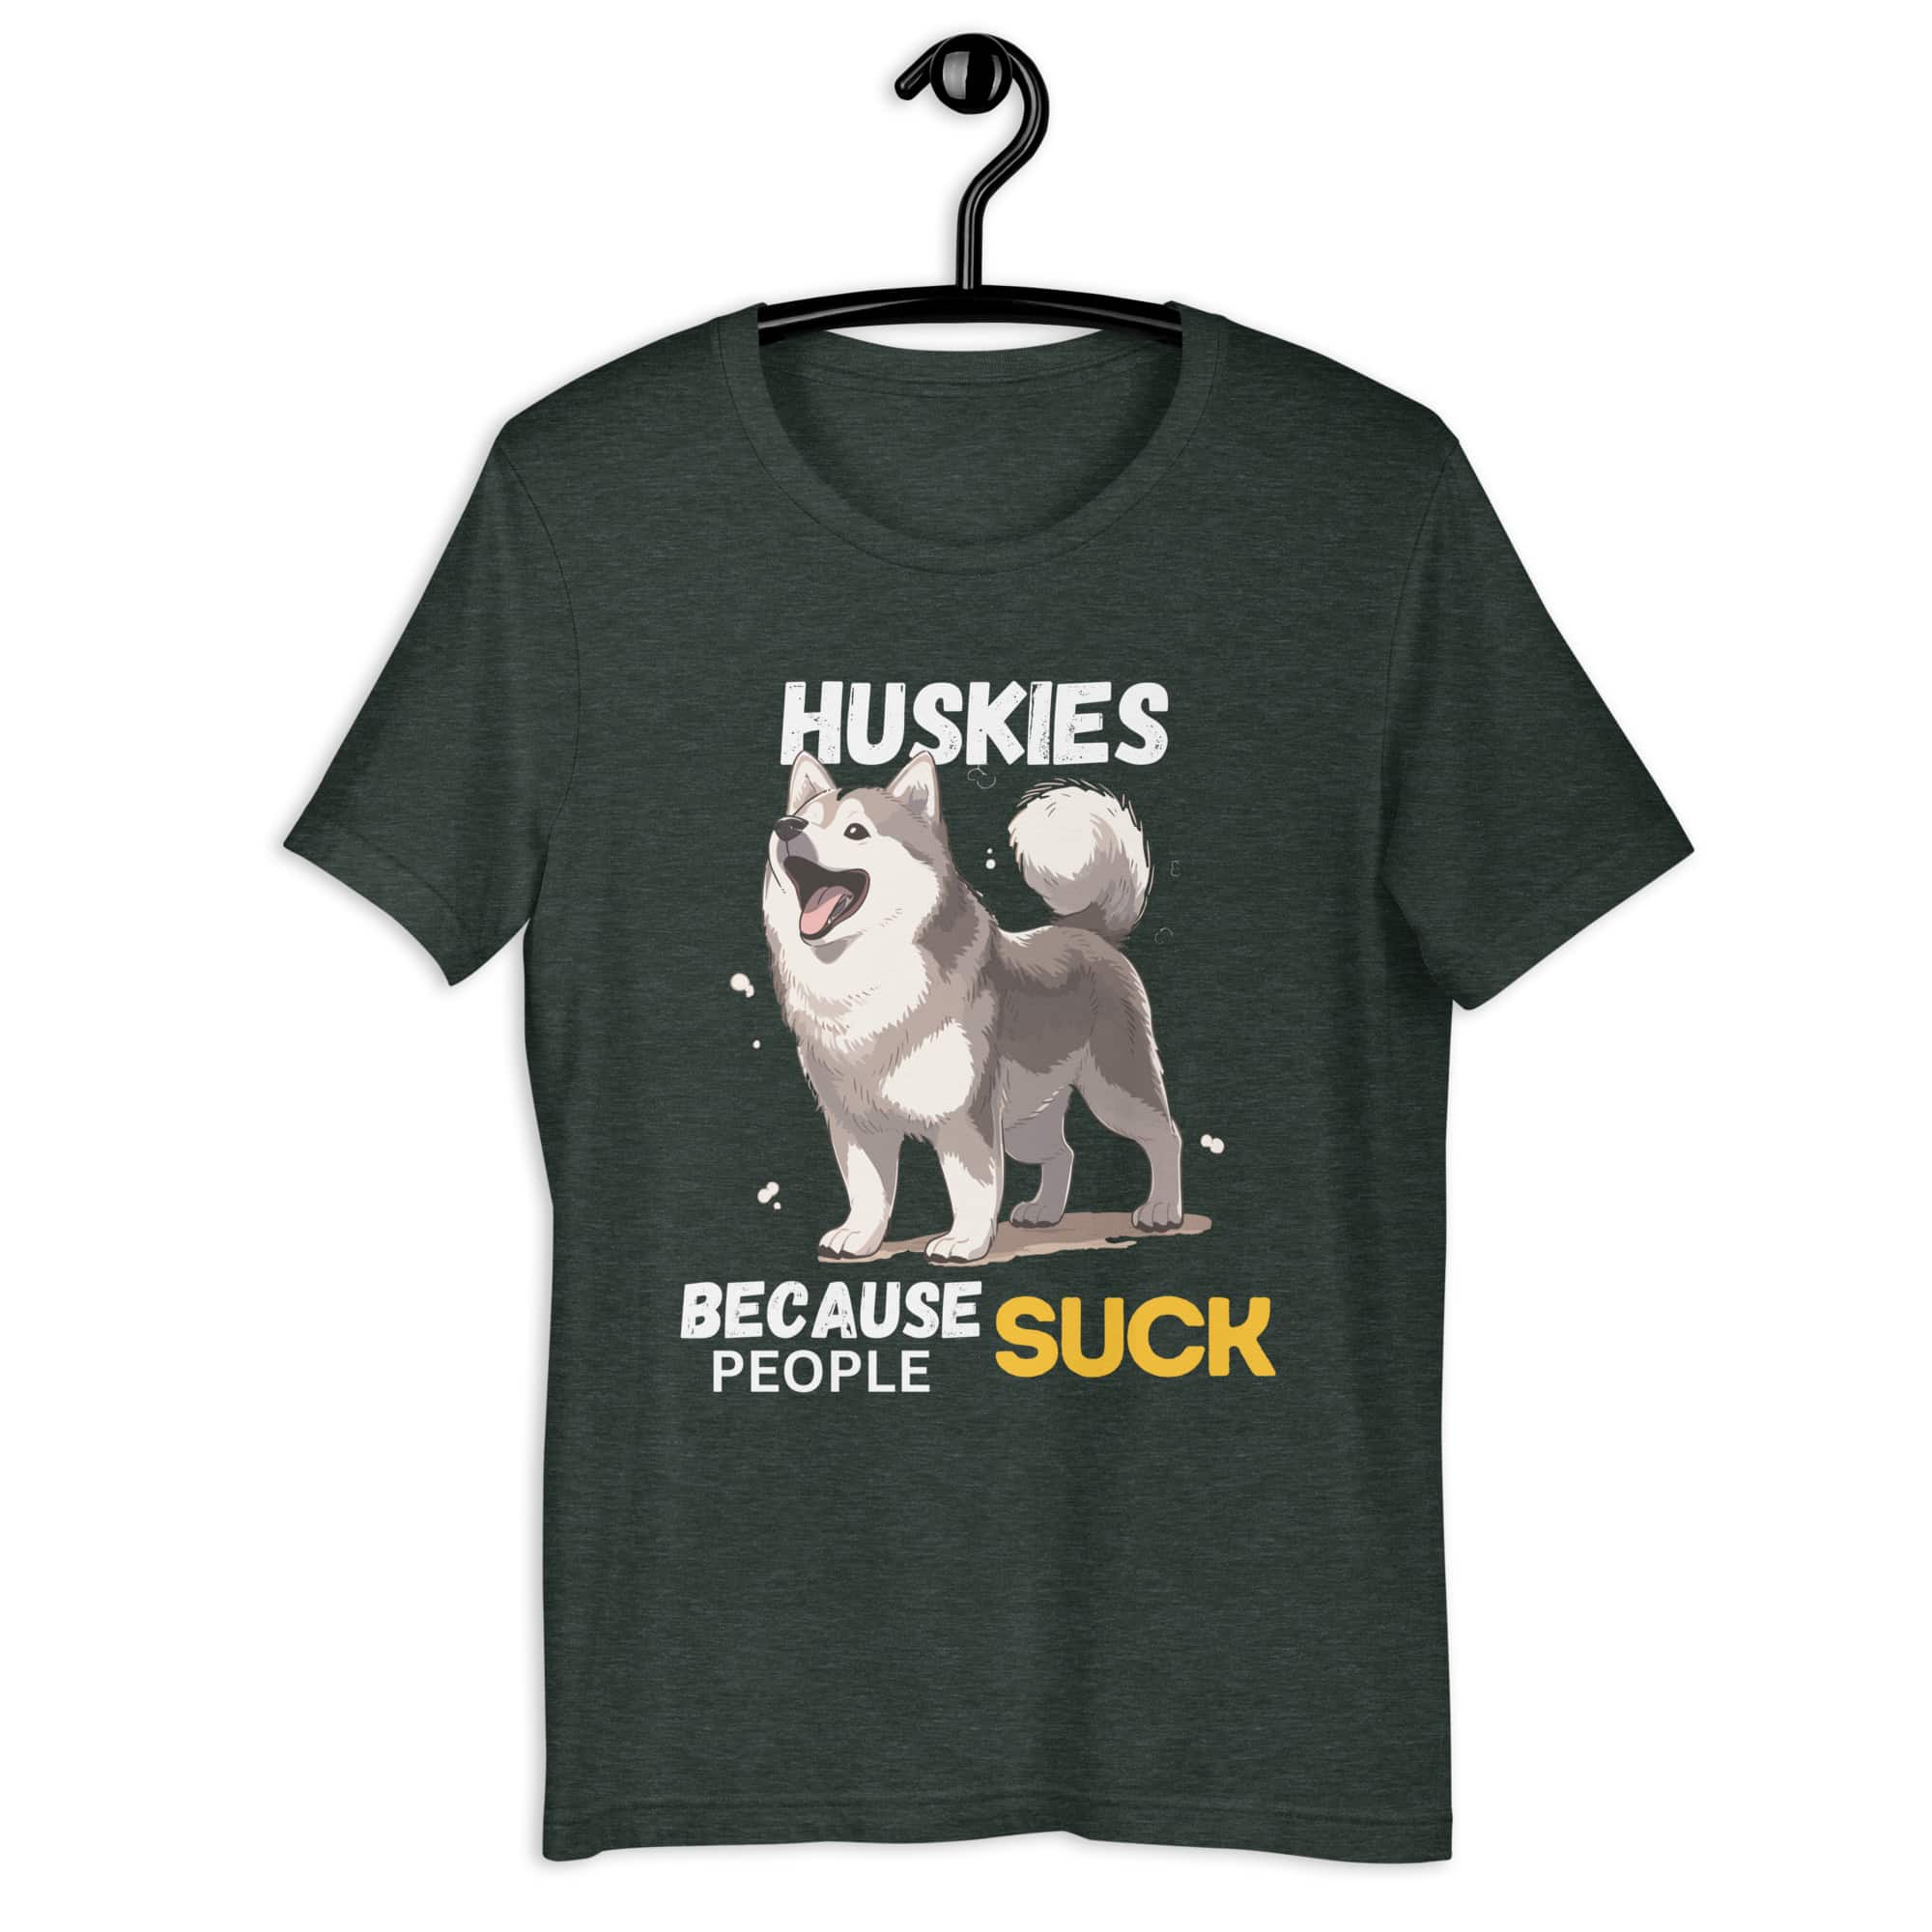 Huskies Because People Suck Unisex T-Shirt matte gray